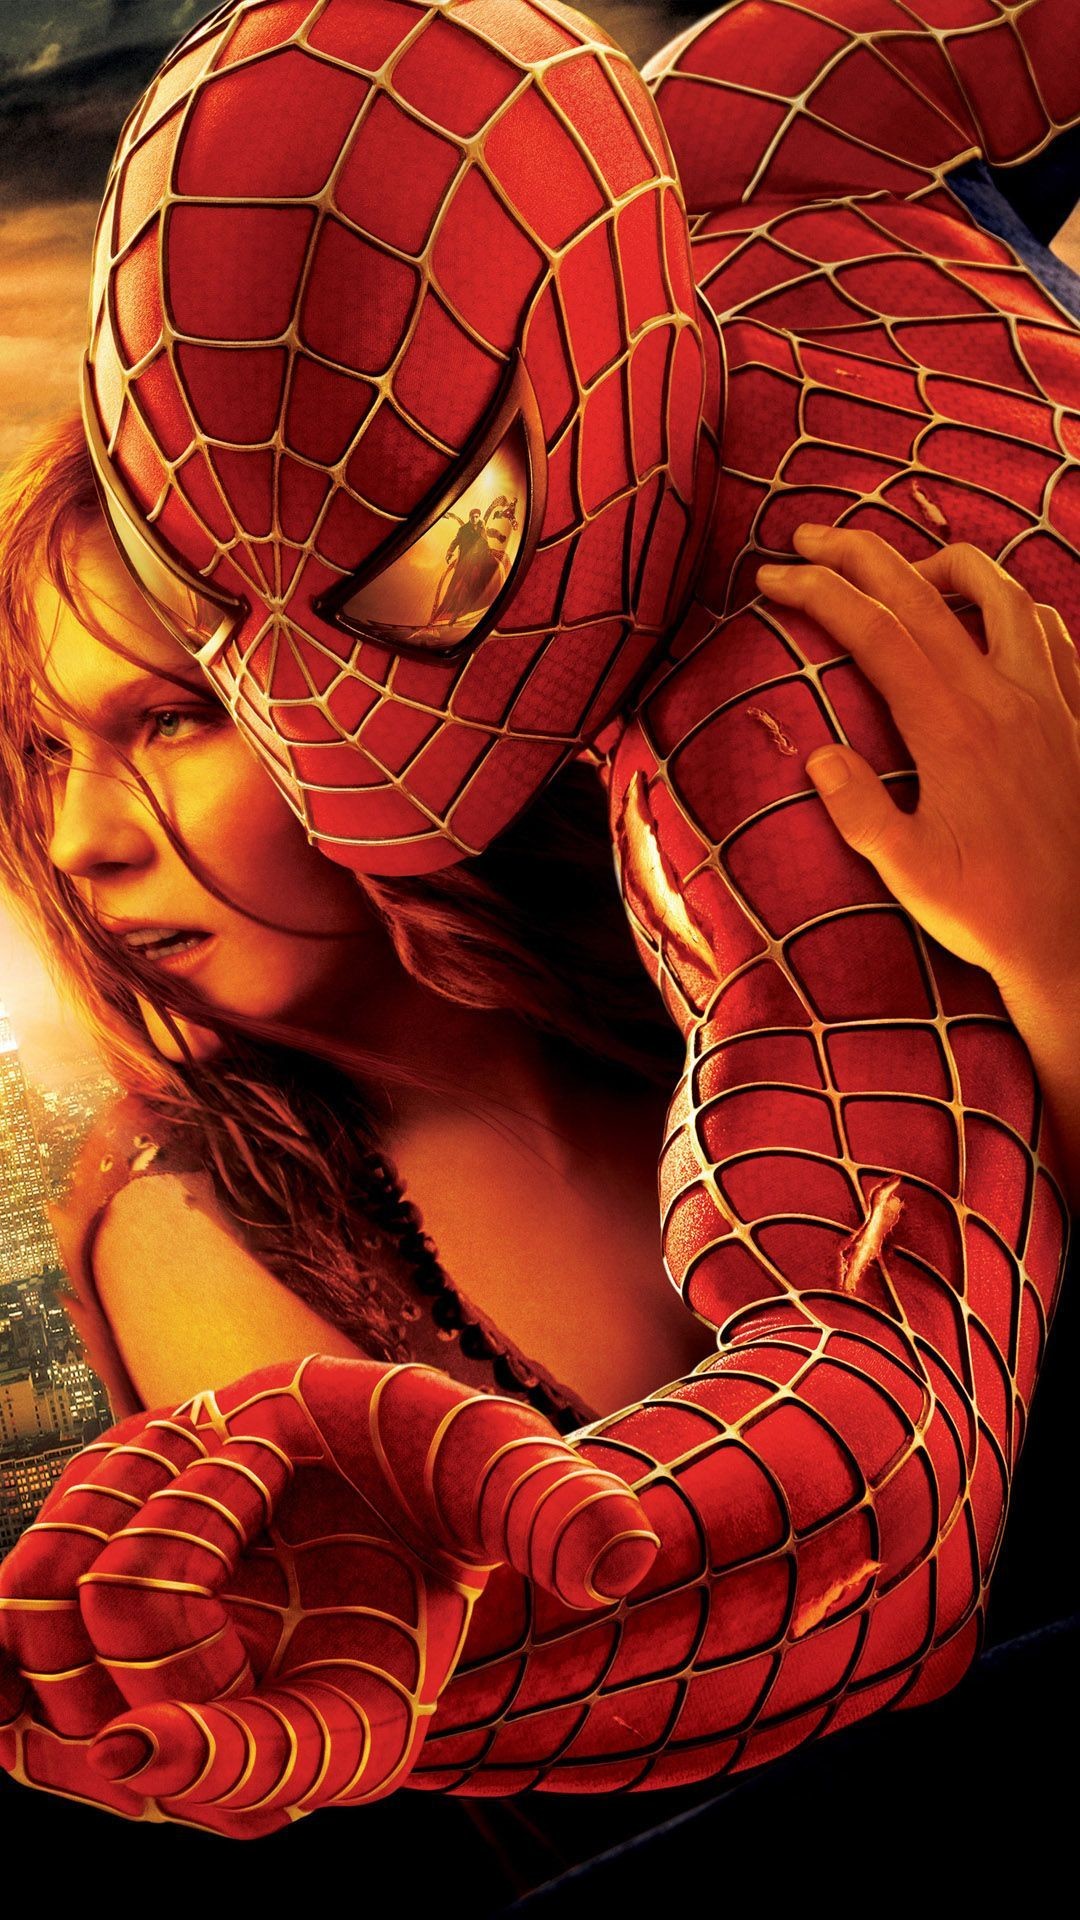 Spider Man 3 Wallpaper